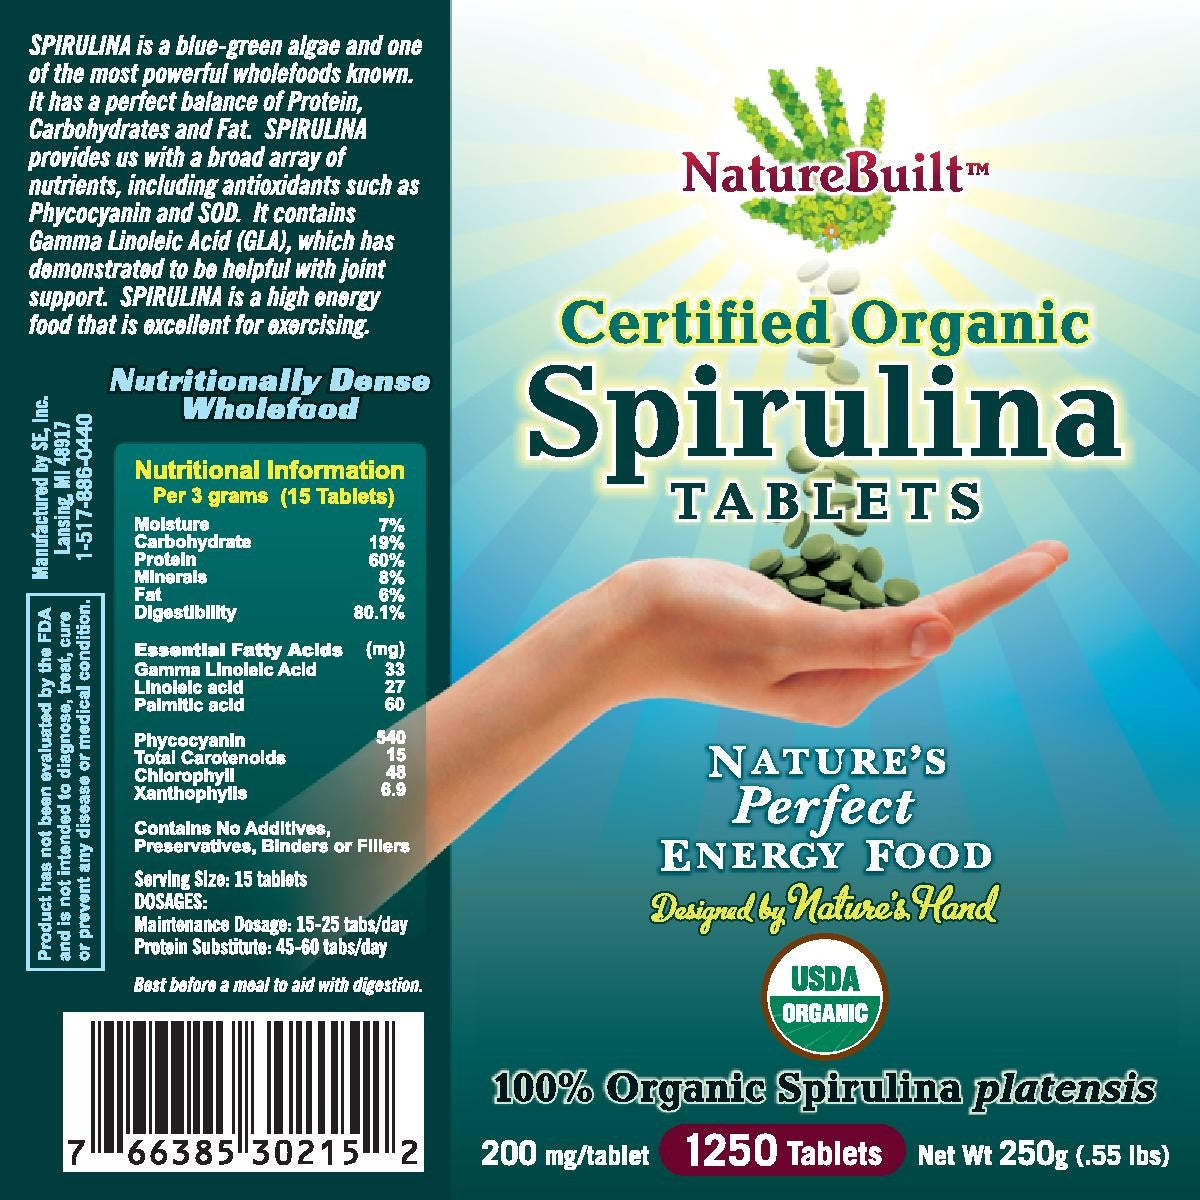 NatureBuilt【Taiwan】USDA Organic Spirulina Tablets